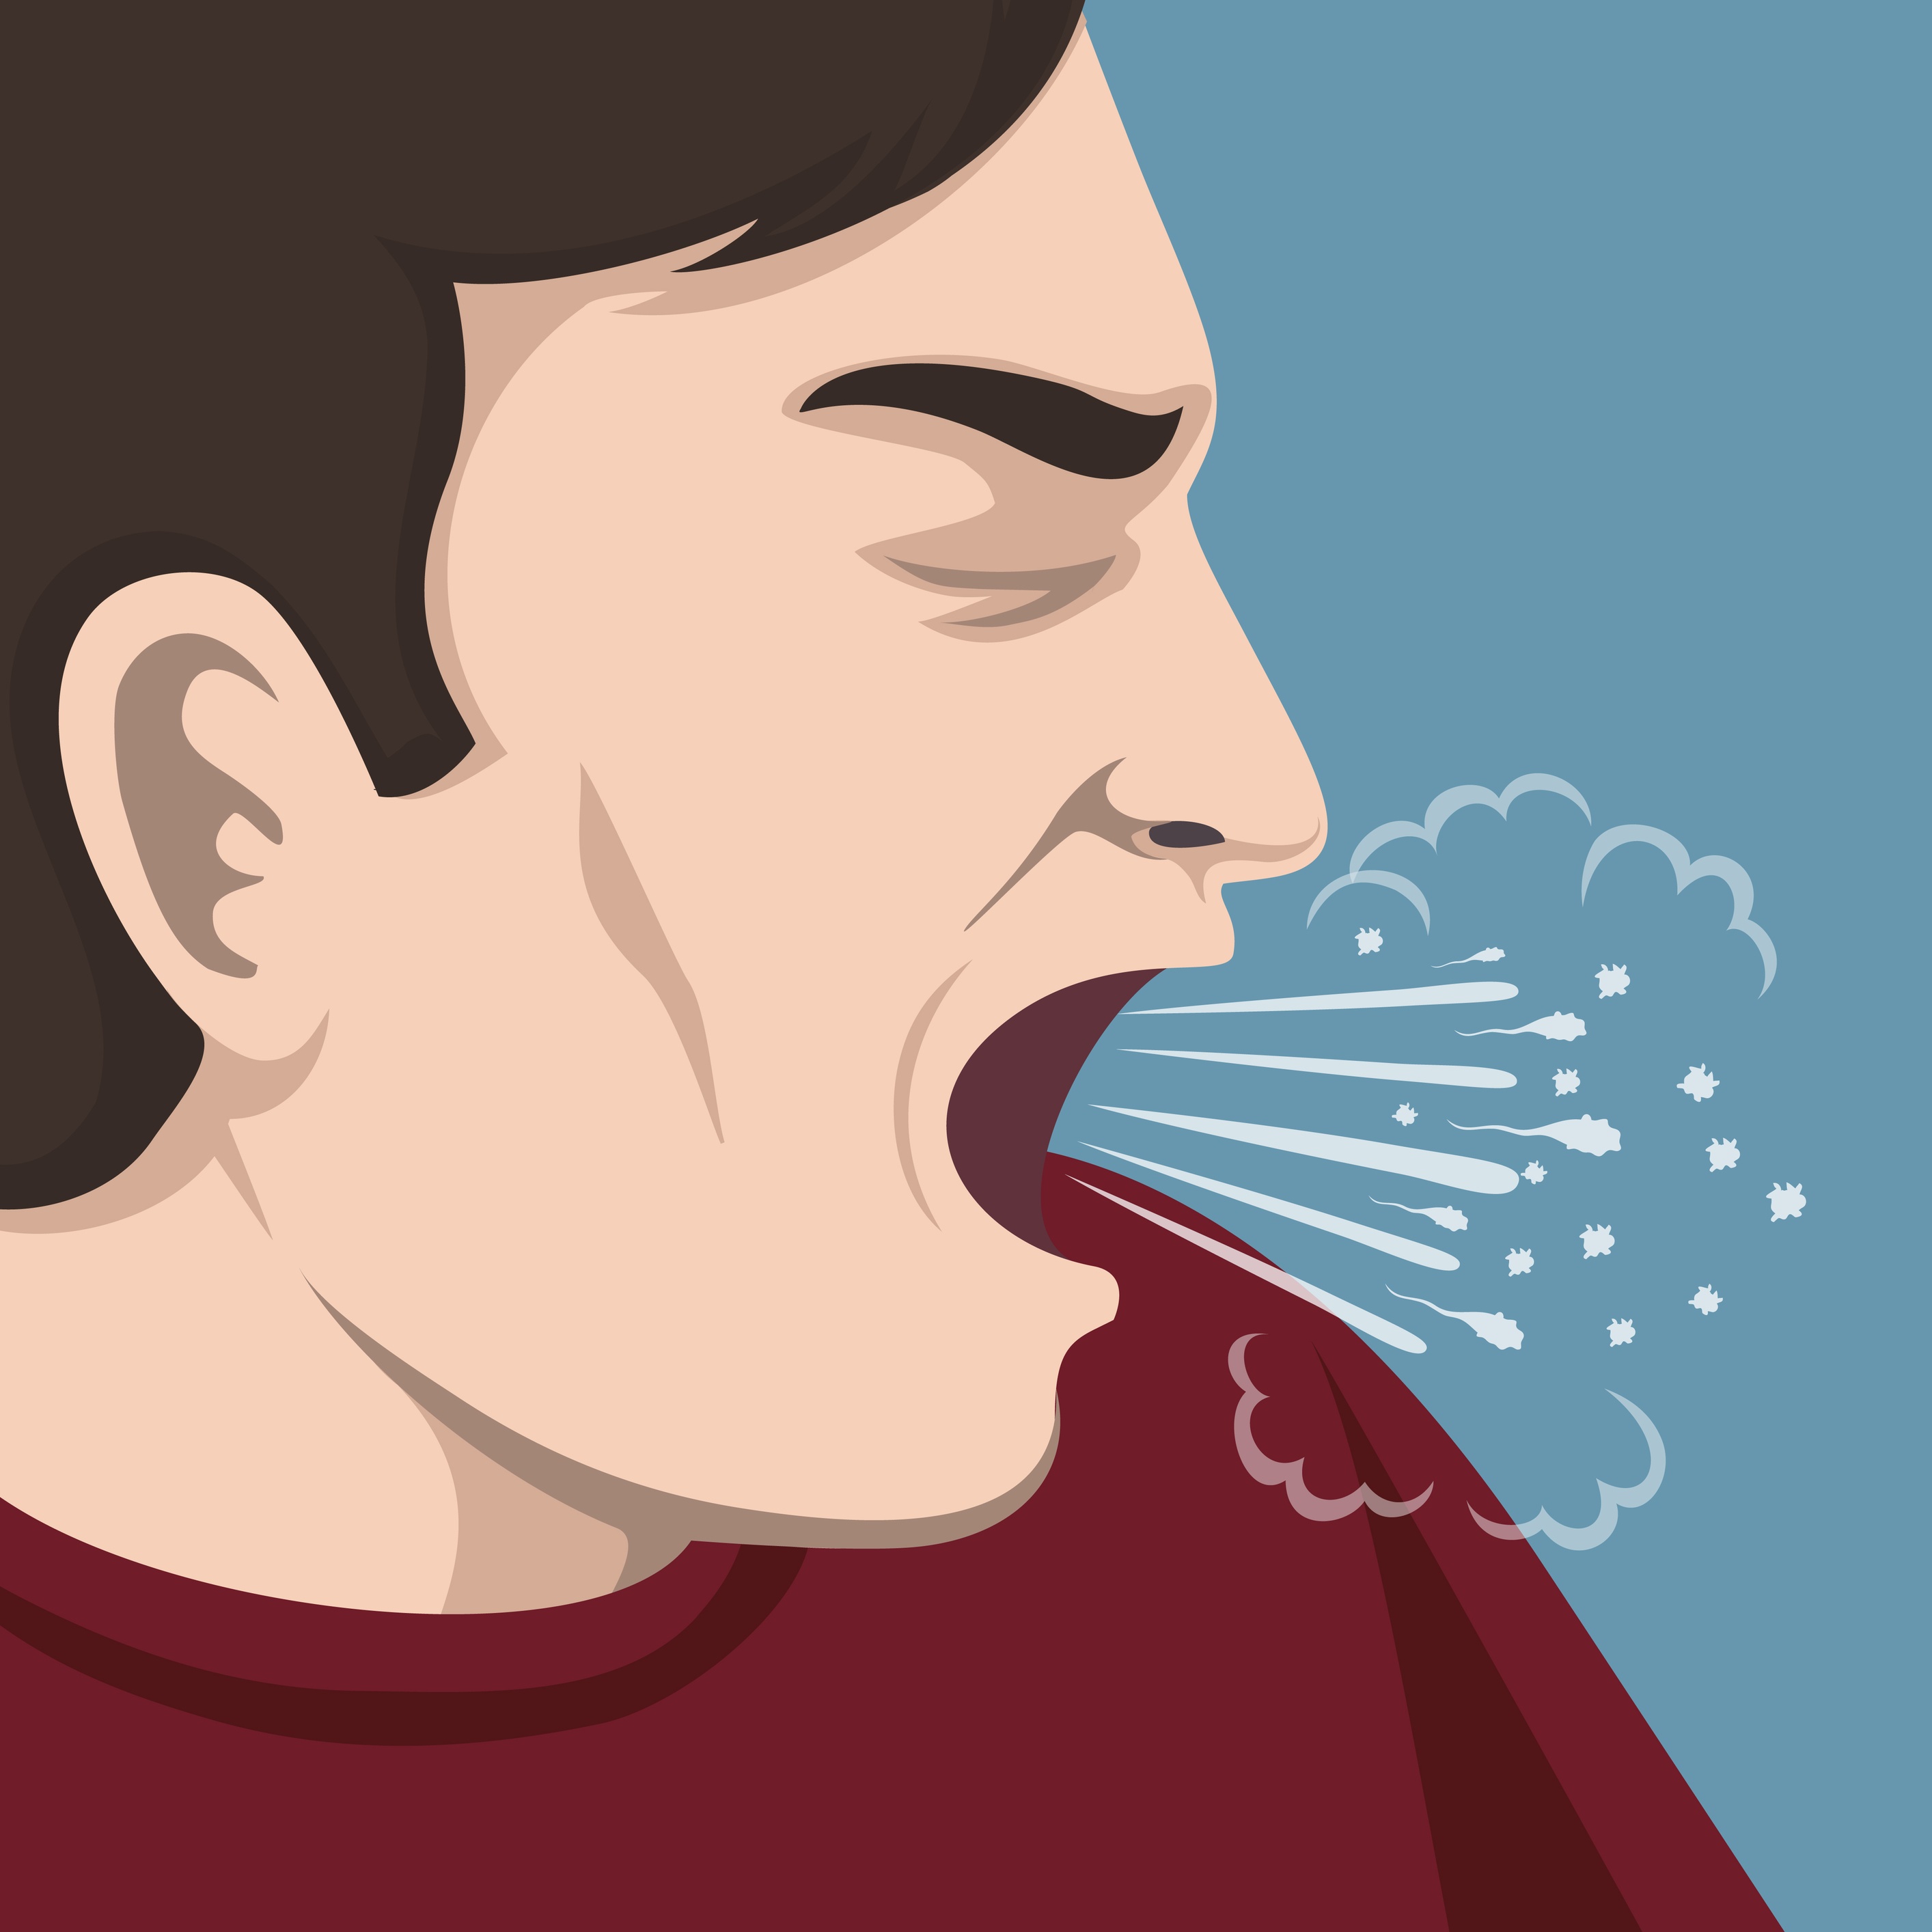 man coughing illustration